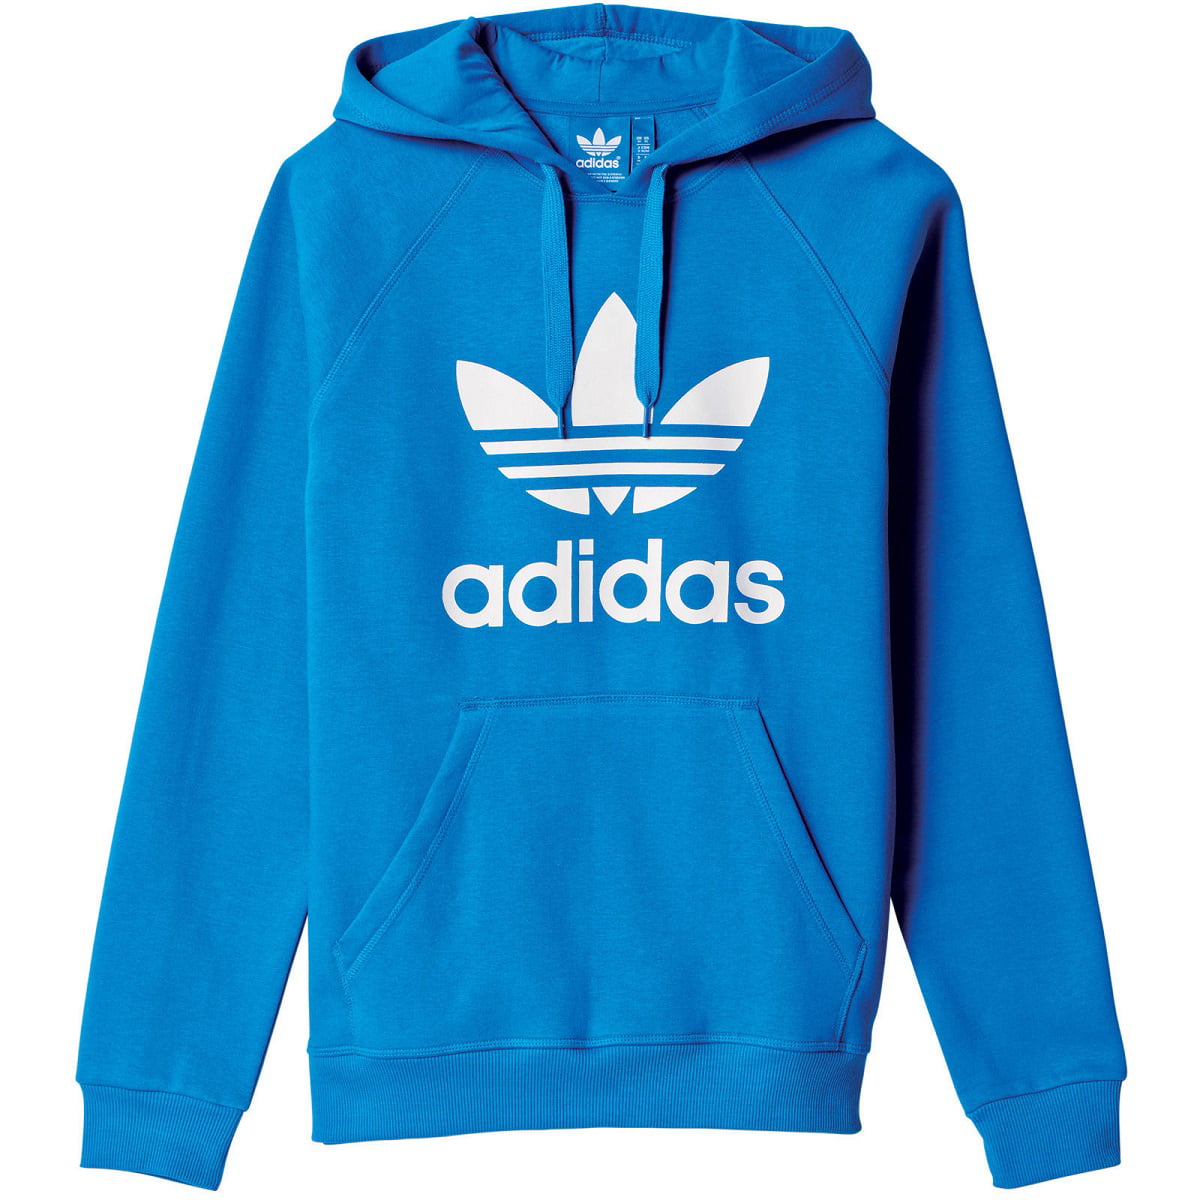 Adidas - New Mens Adidas Original Mens Trefoil Fleece Hoodie Hooded Sweatshirt Pullover Jumper